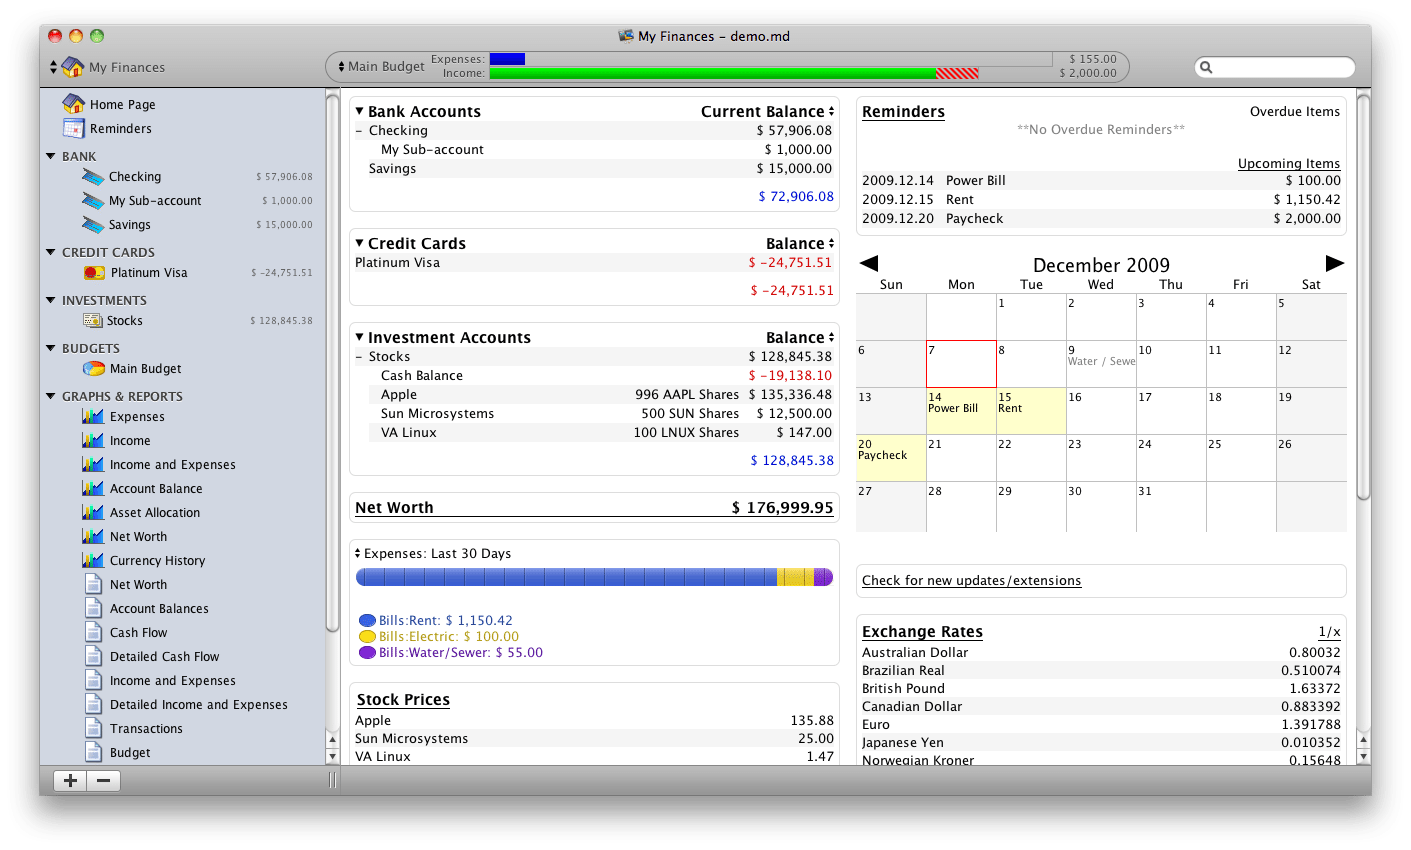 home budget software for mac